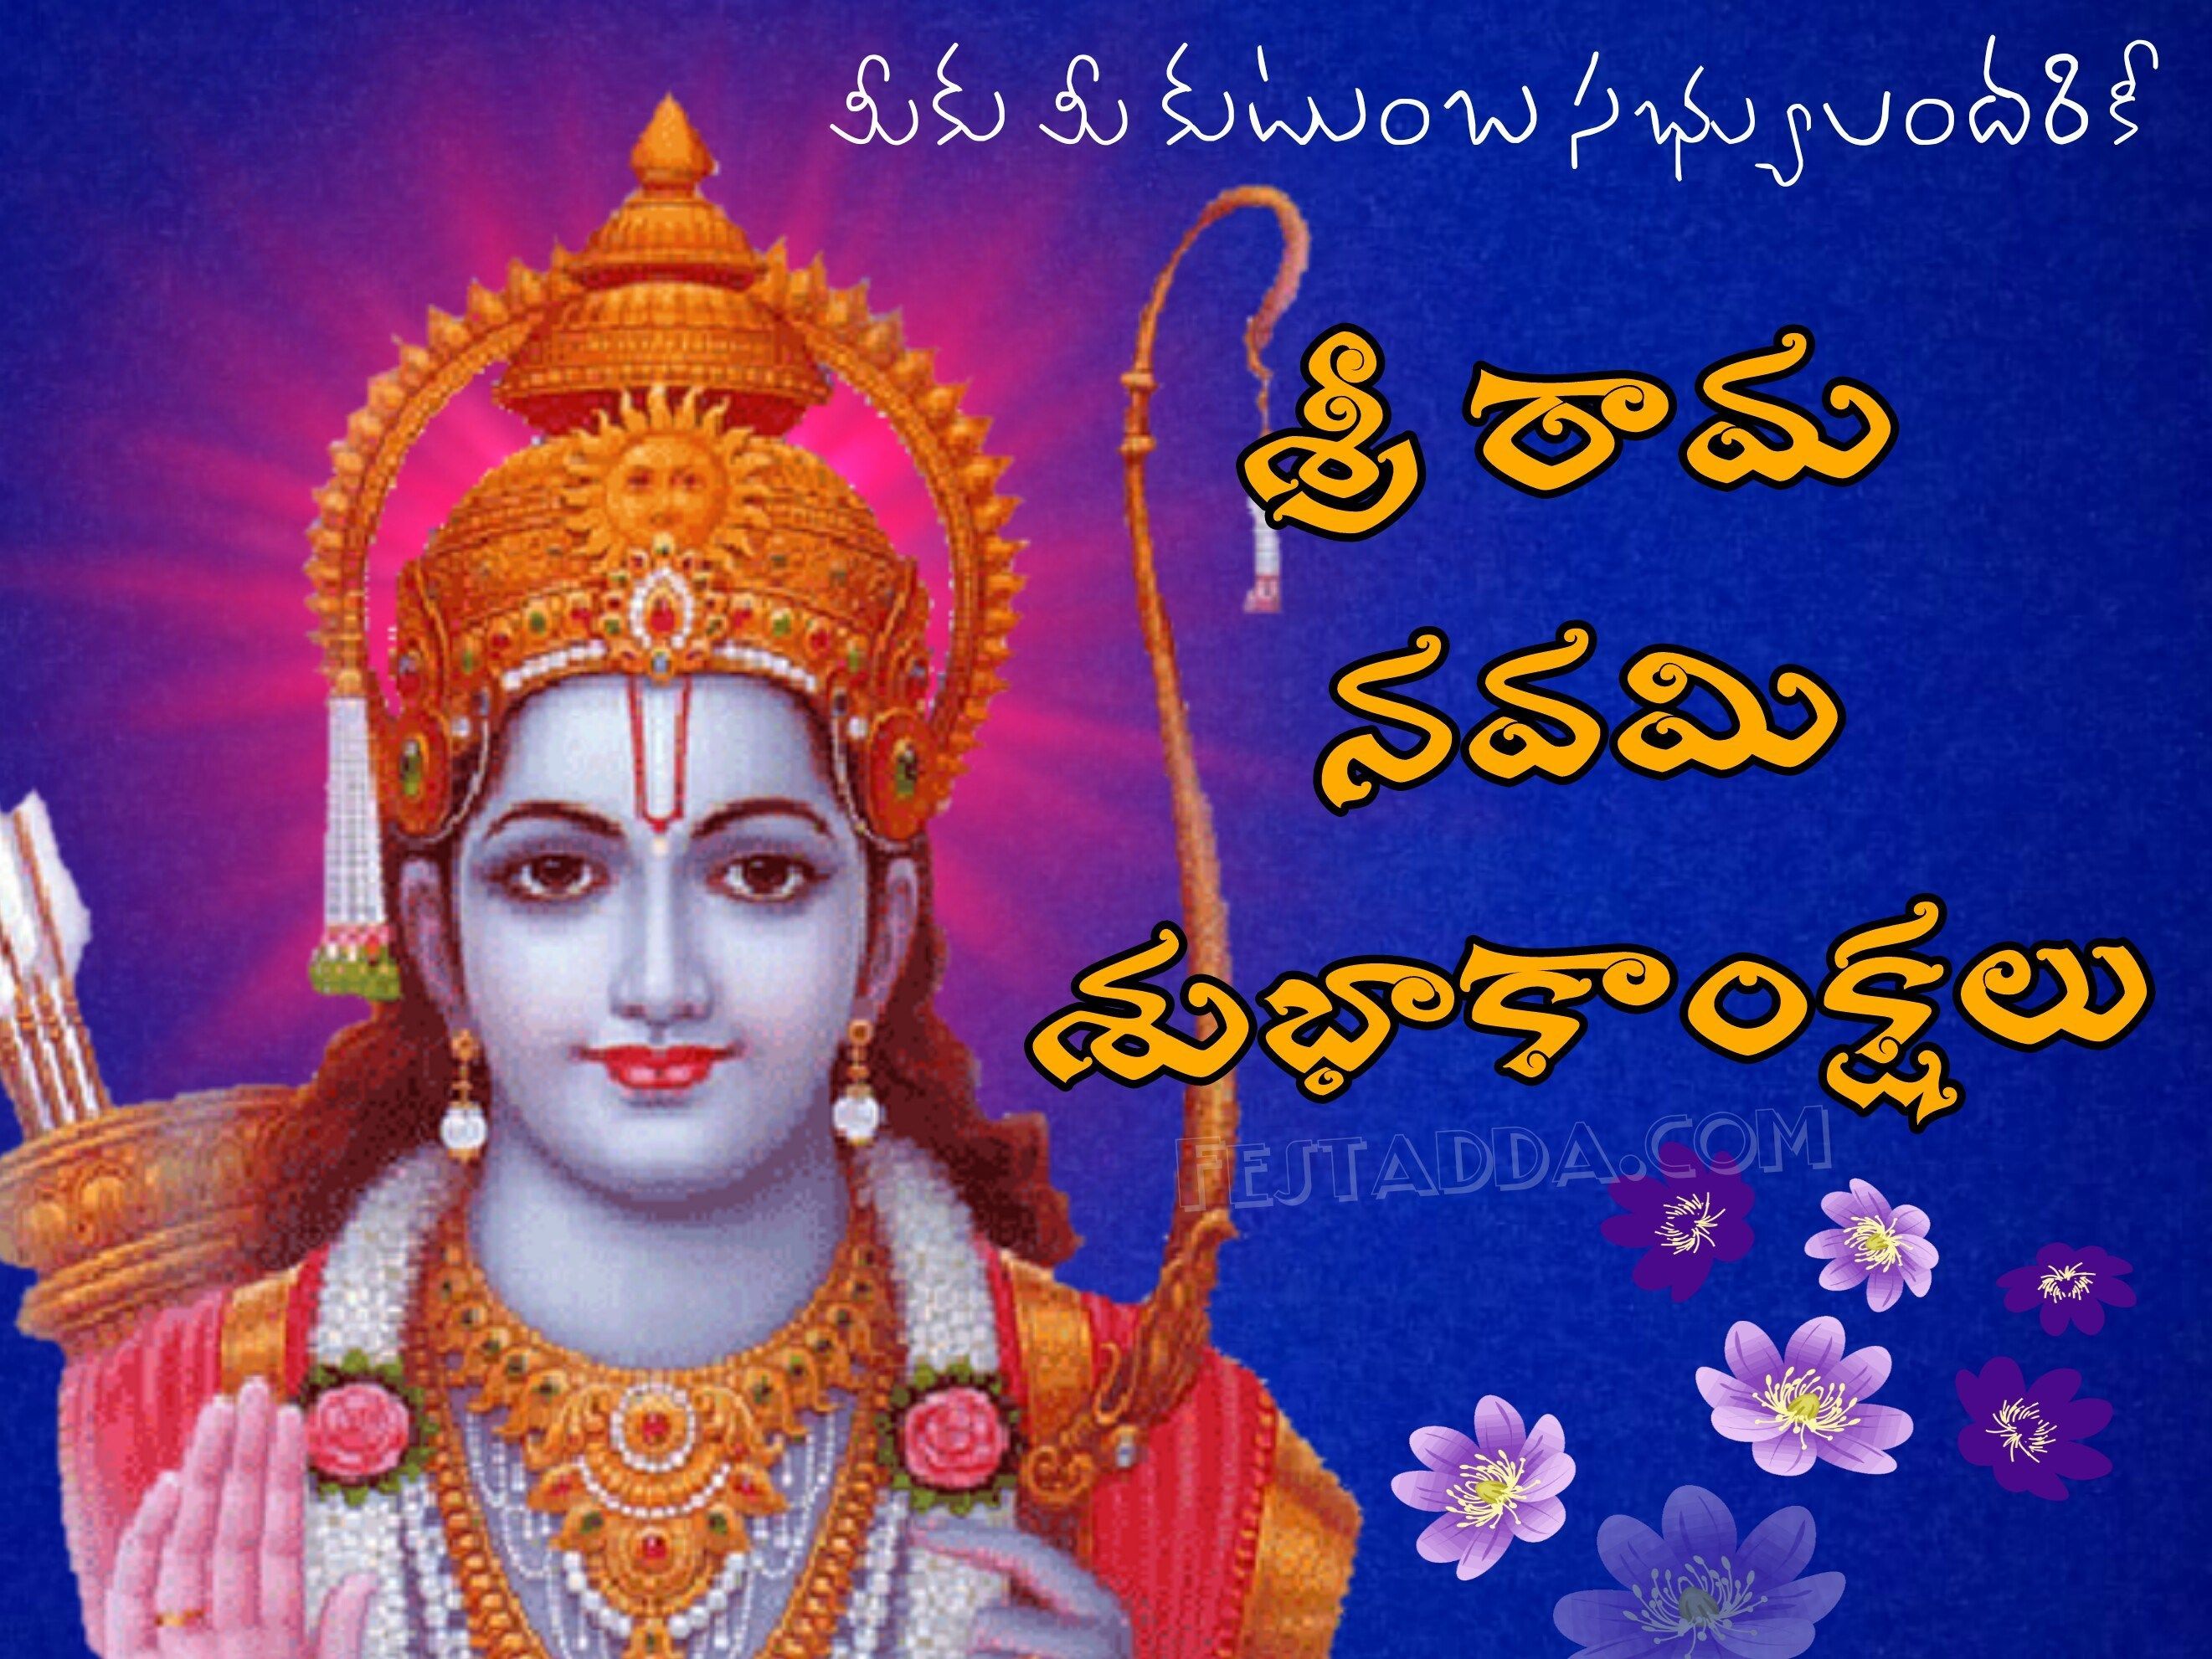 Sri Rama Navami Wishes 2020 Image Photo Wallpaper Full HD